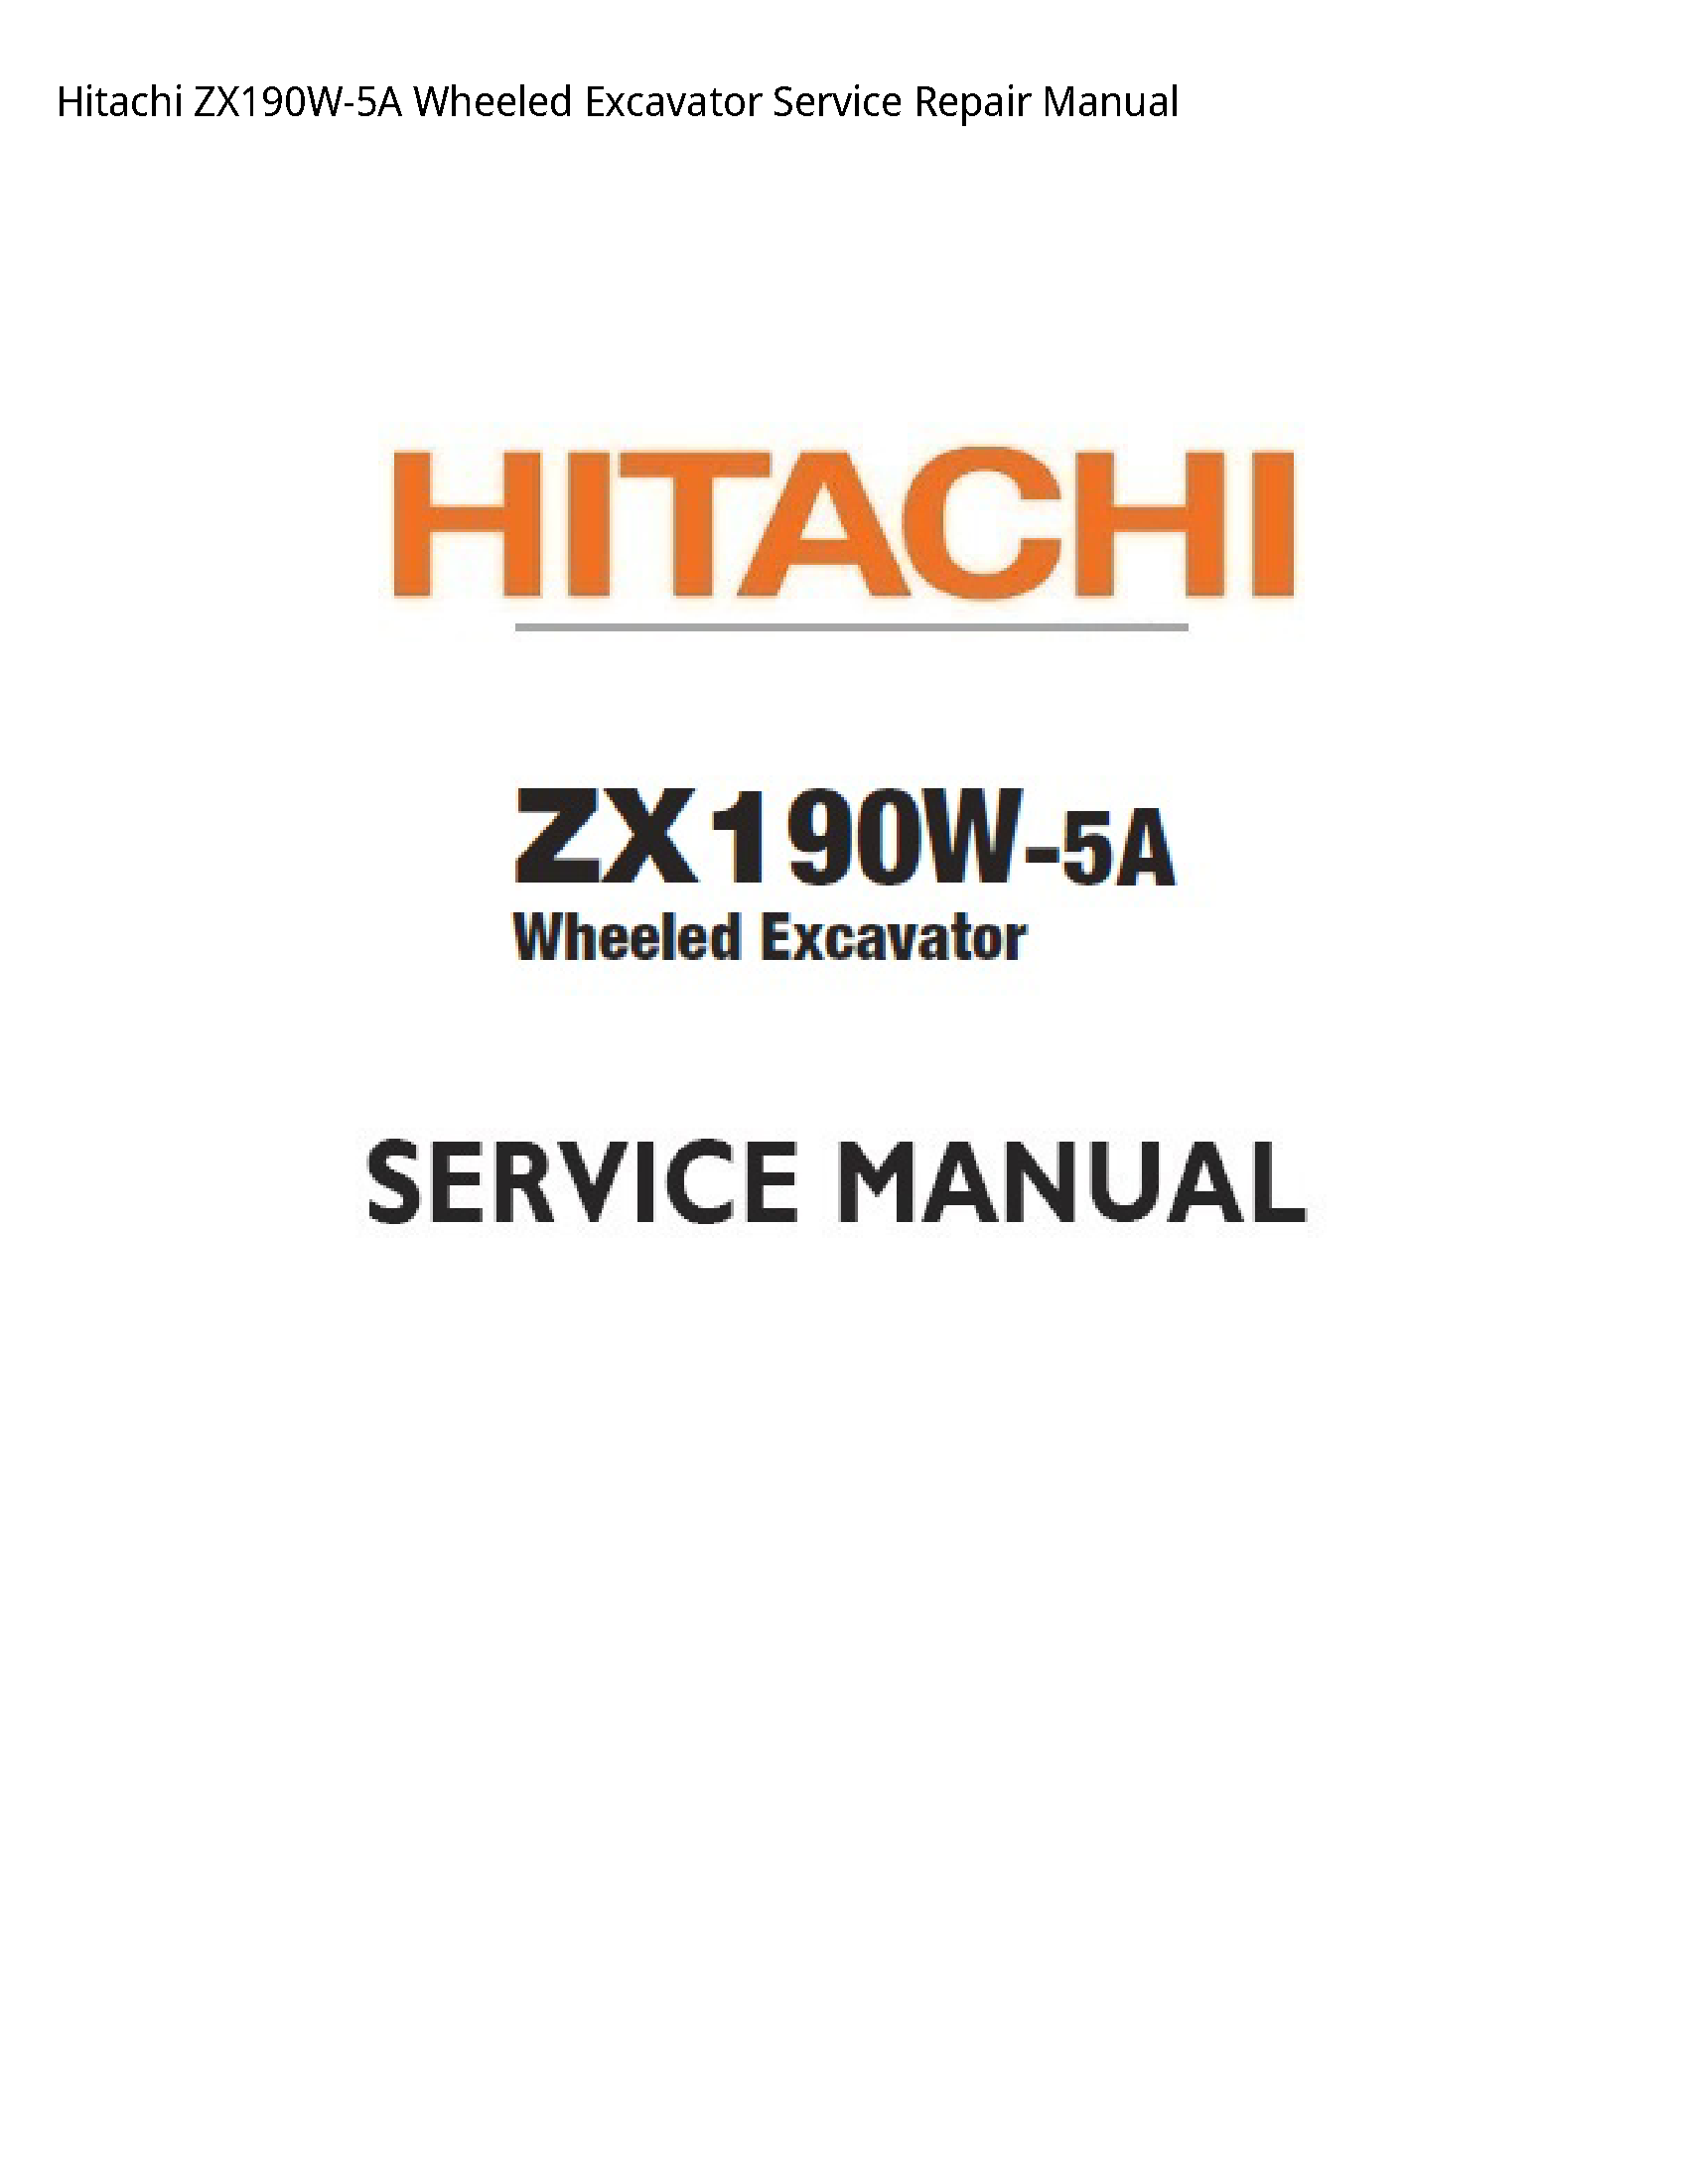 Hitachi ZX190W-5A Wheeled Excavator manual